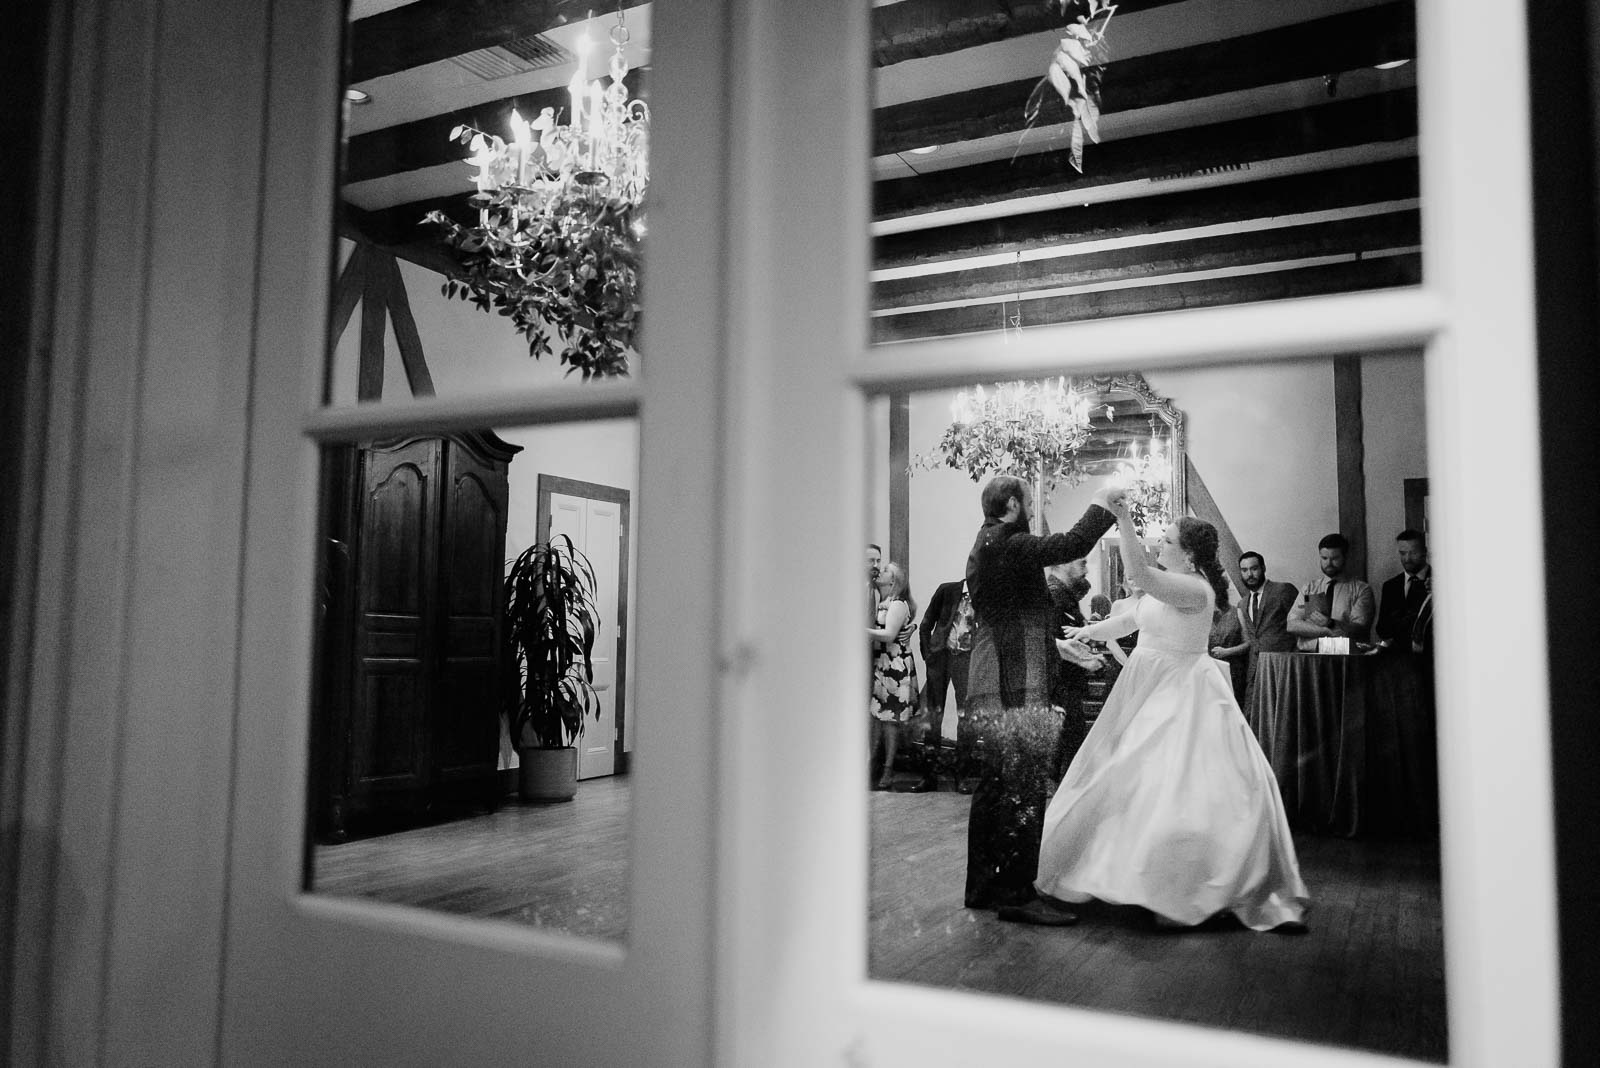 Club Giraud Wedding ceremony reception Leica photographer Philip Thomas Photography